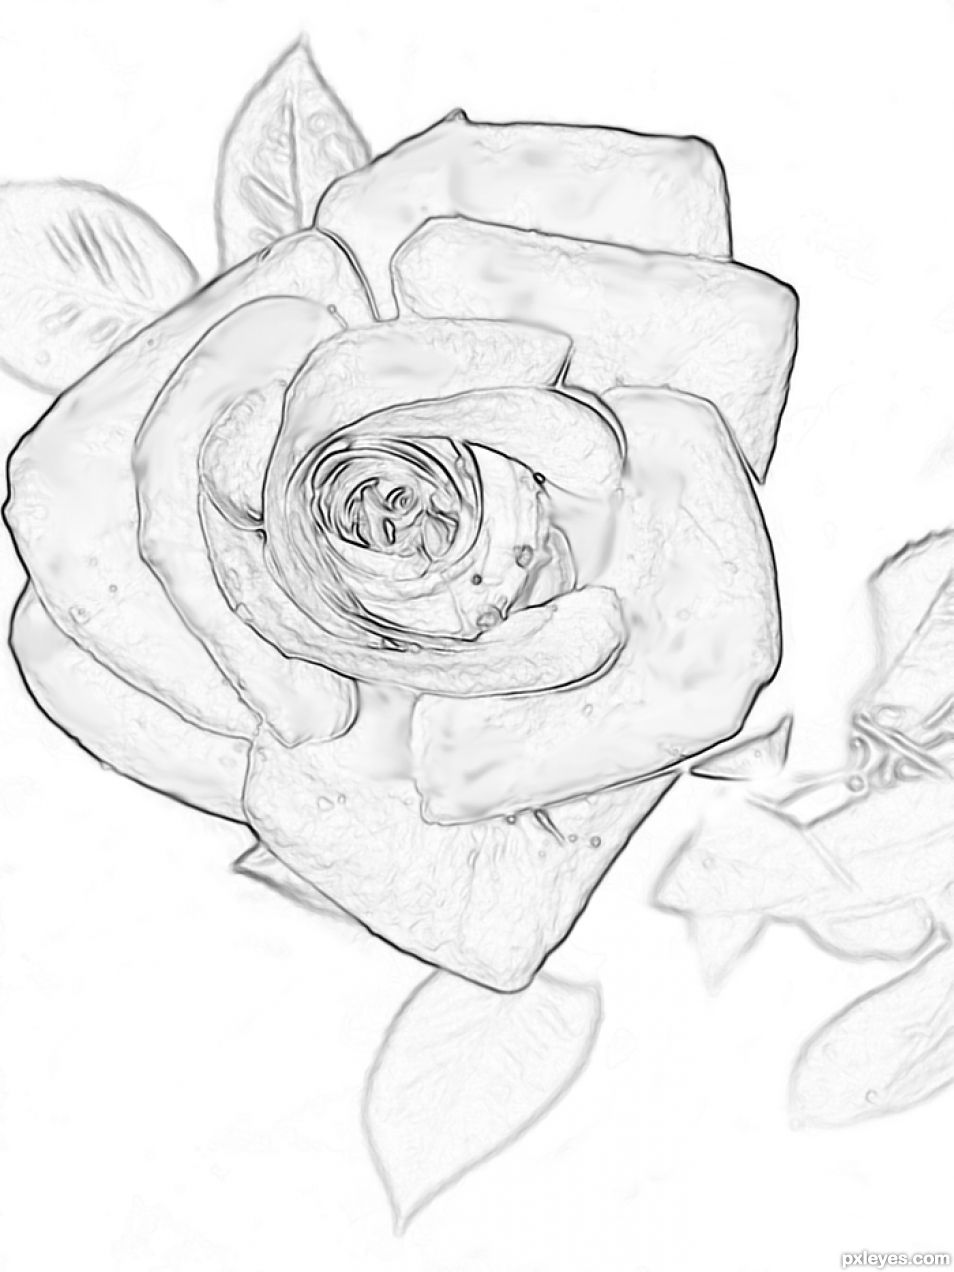 Creation of Autumn Rose: Step 2